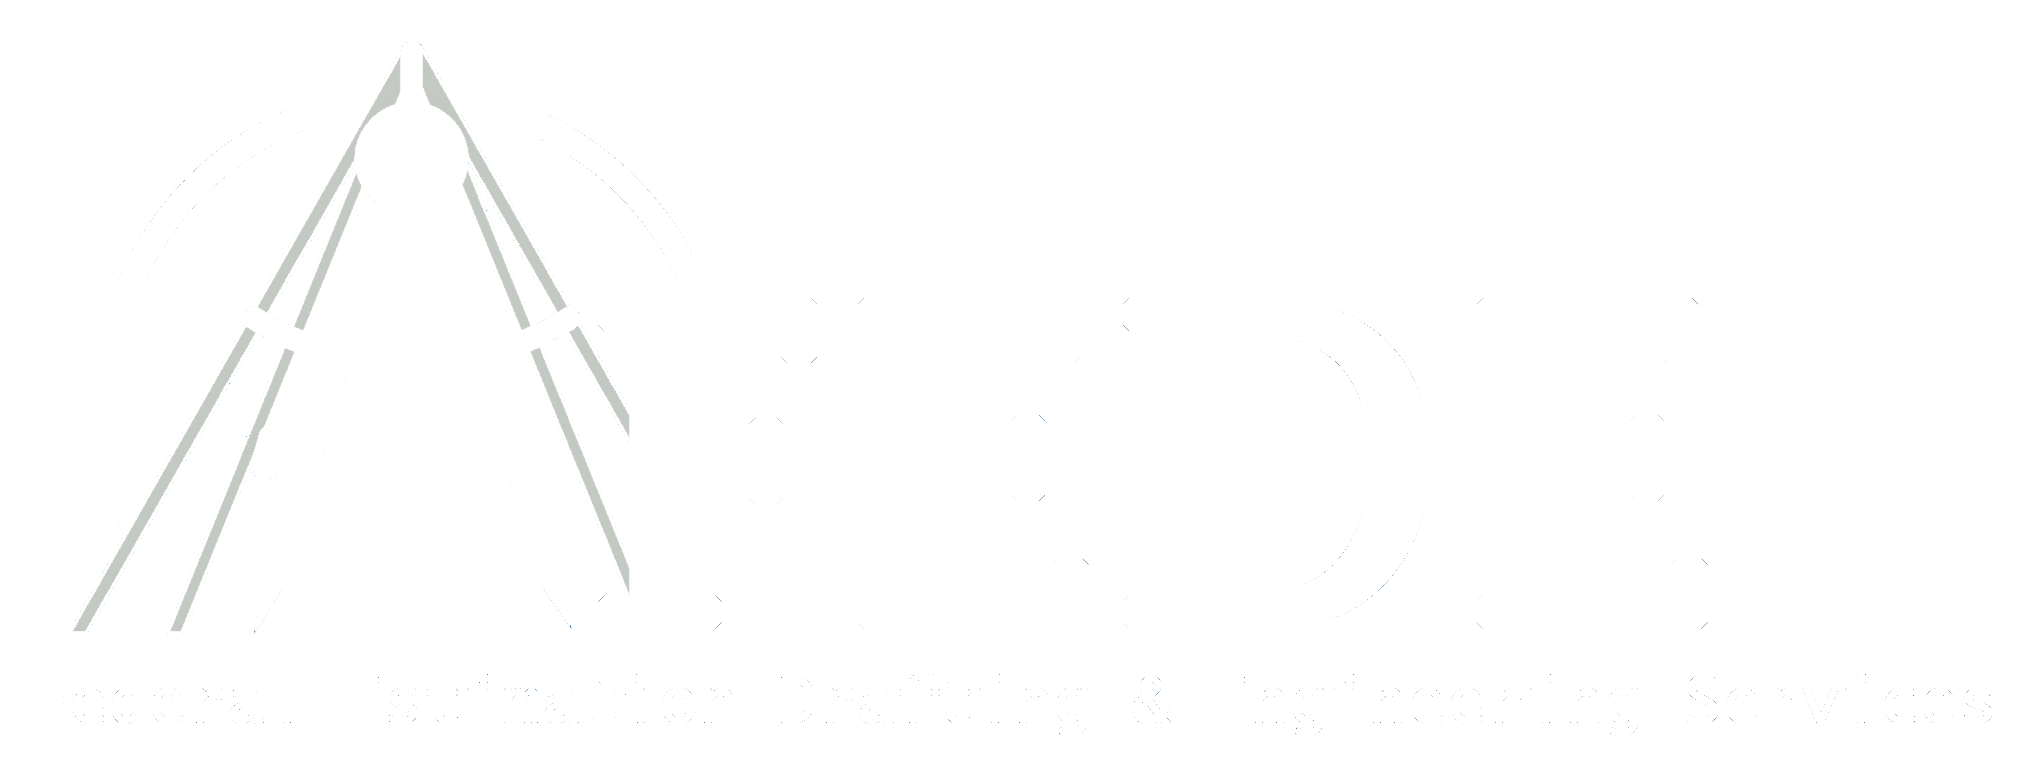 federalestimating-footer-logo